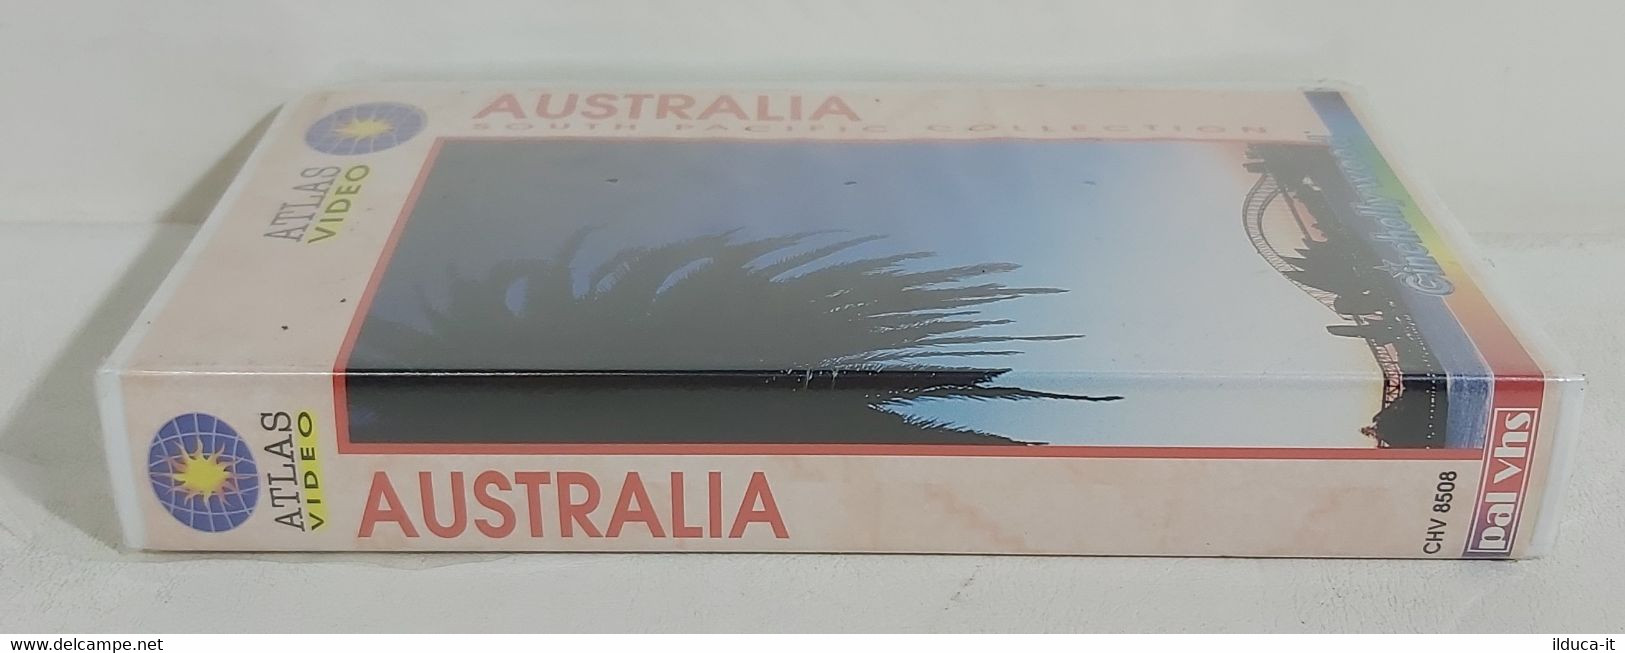 06964 VHS - AUSTRALIA South Pacific Collection - Cinehollywood - Reizen